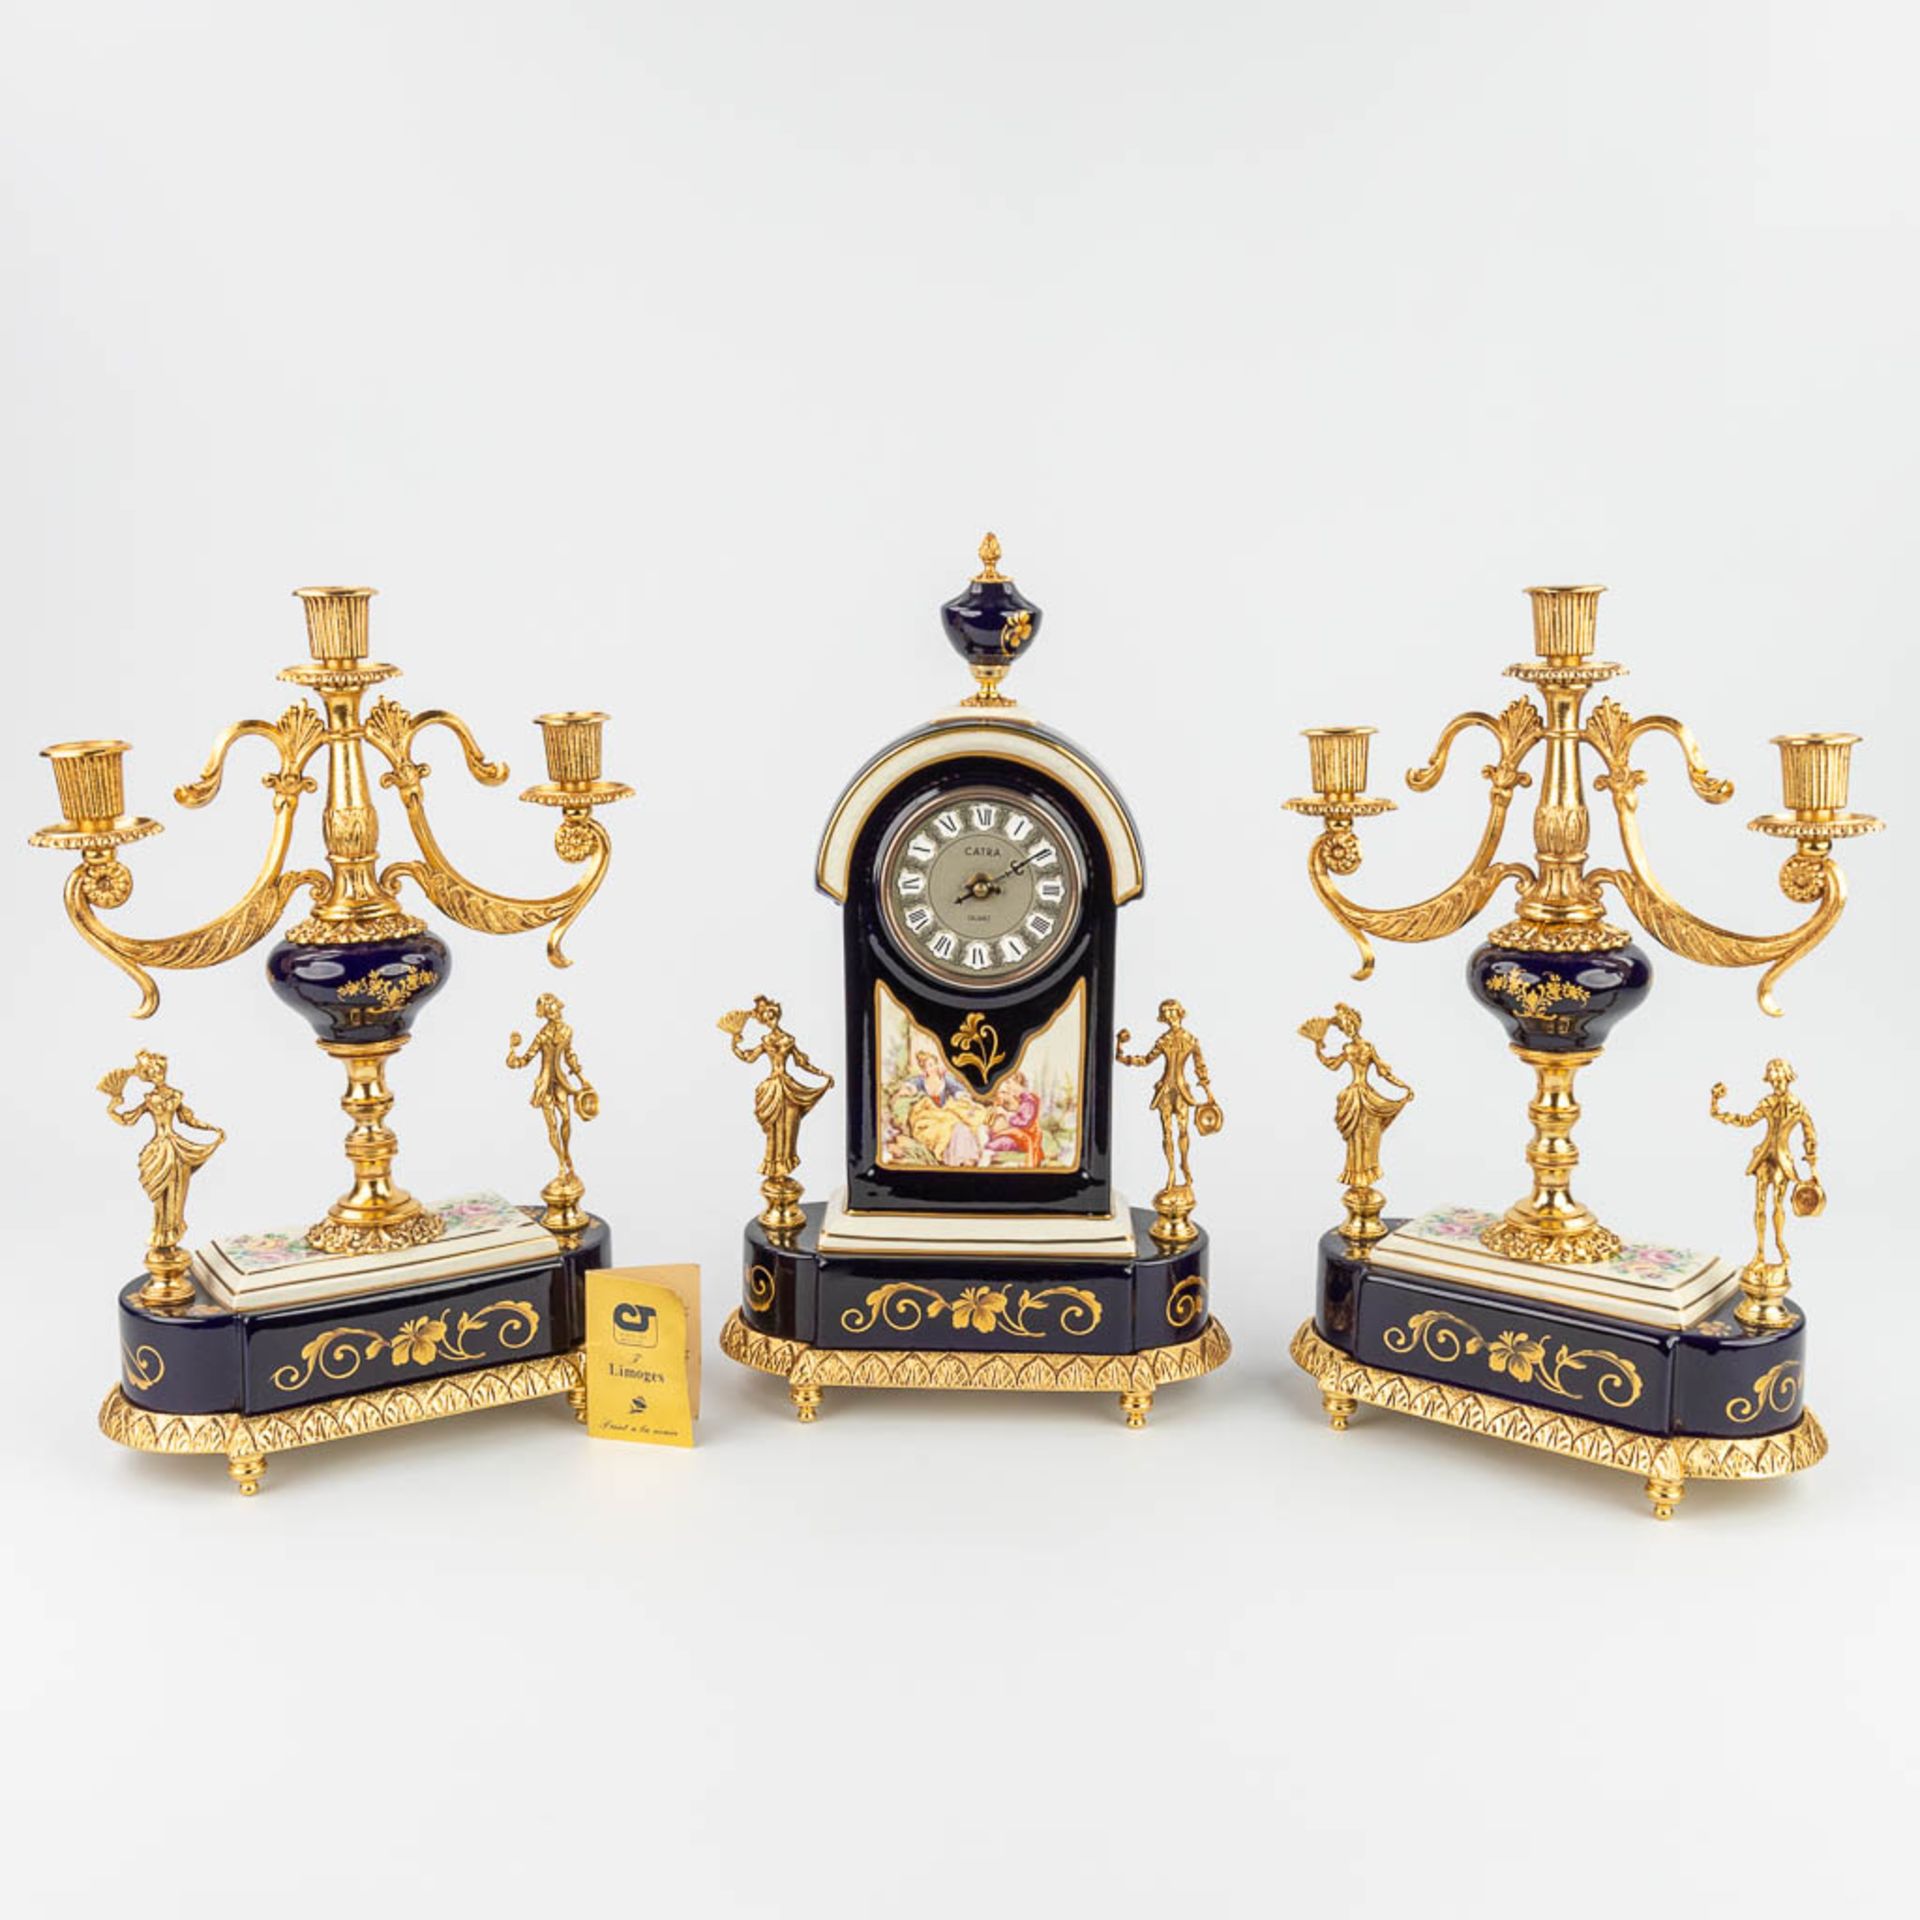 Limoges, a three-piece mantle garniture clock and candelabra, Campostrini e trallori (12 x 23 x 40cm